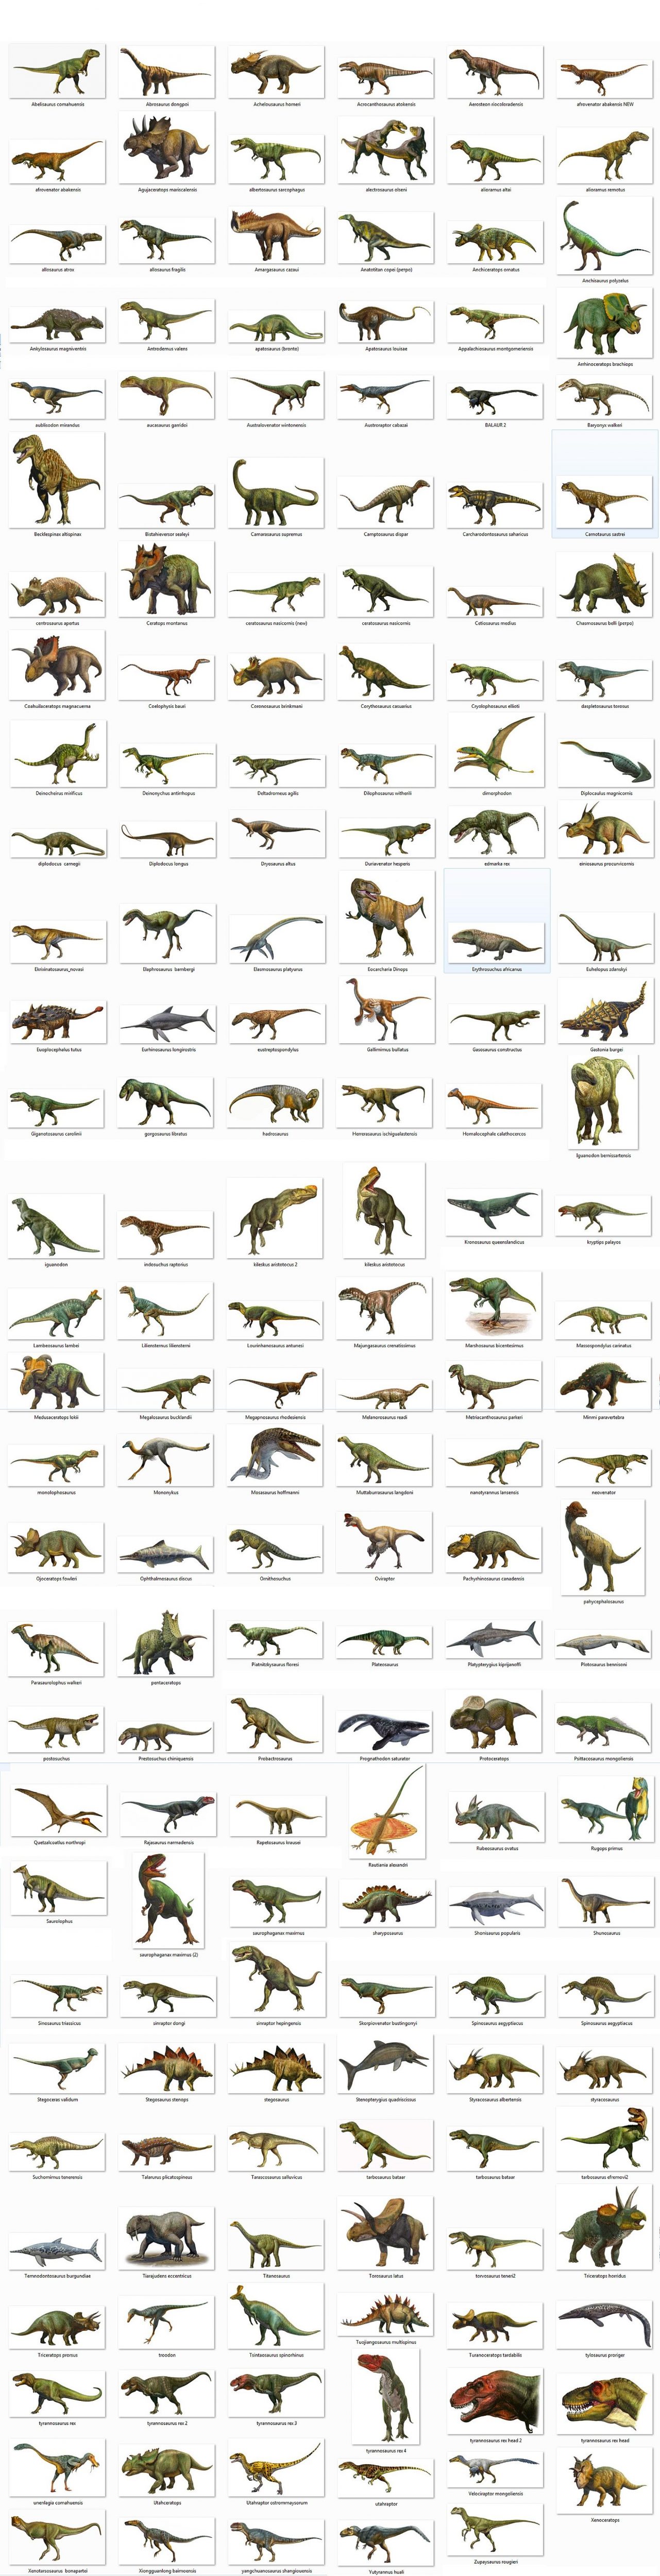 dinosaurs-types-chart-pixelsham